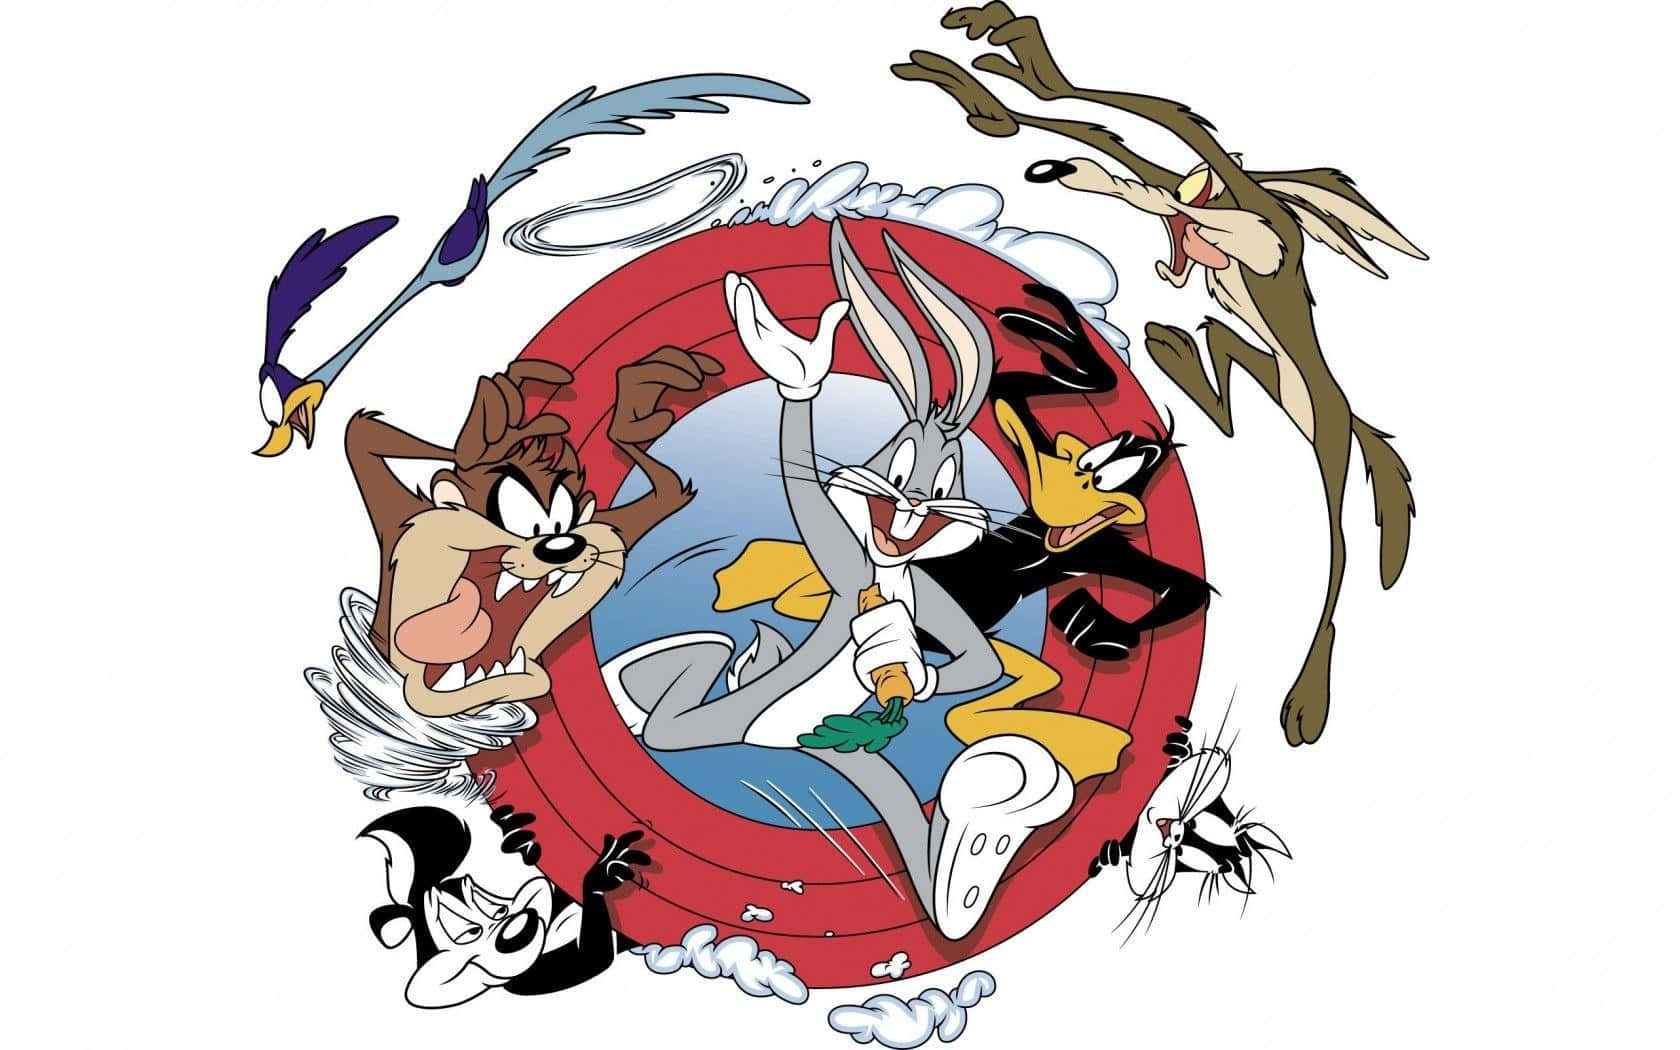 Enjoy the Hilarious Antics of Looney Tunes!